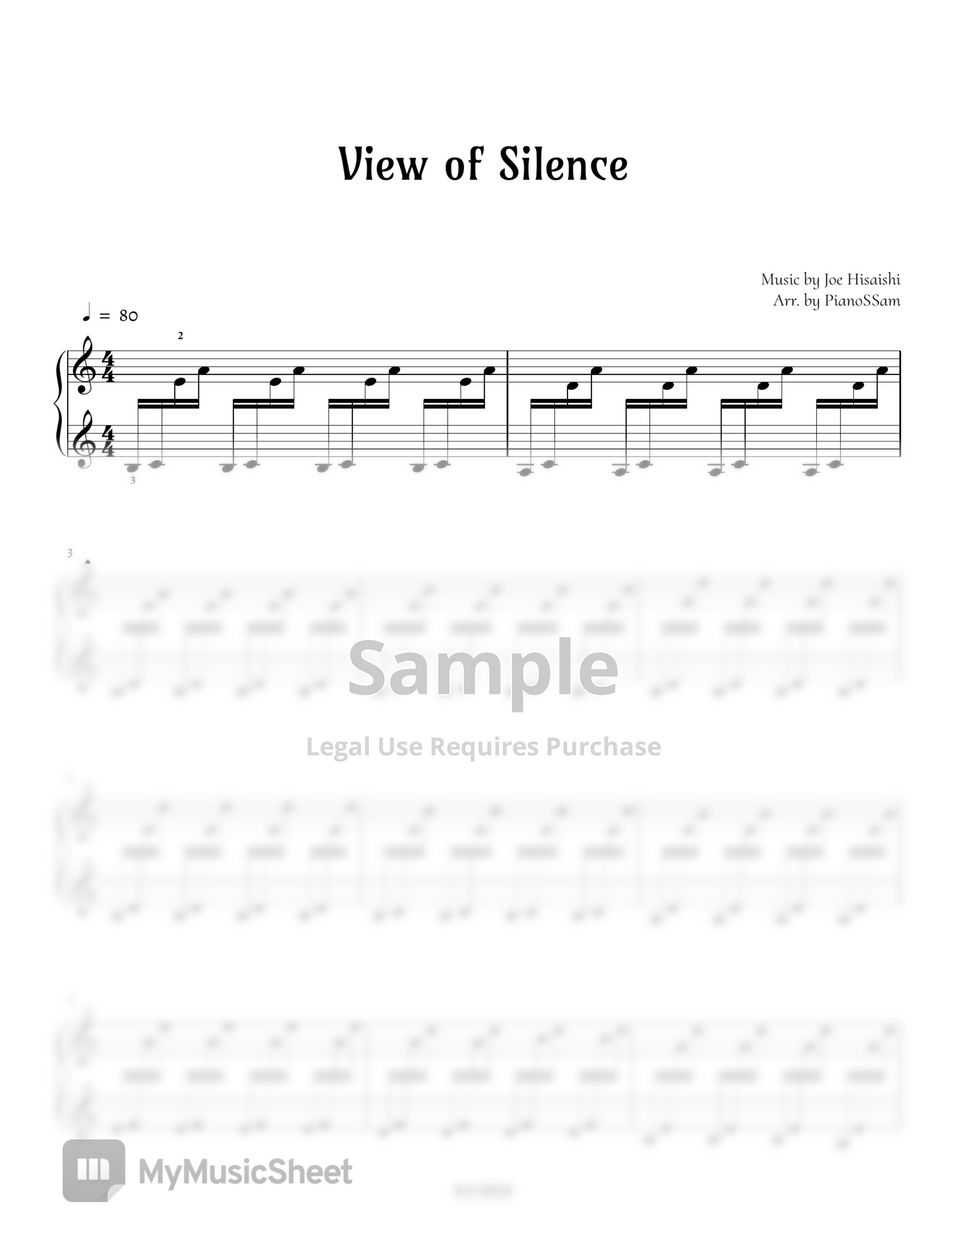 Joe Hisaishi - View of Silence by PianoSSam